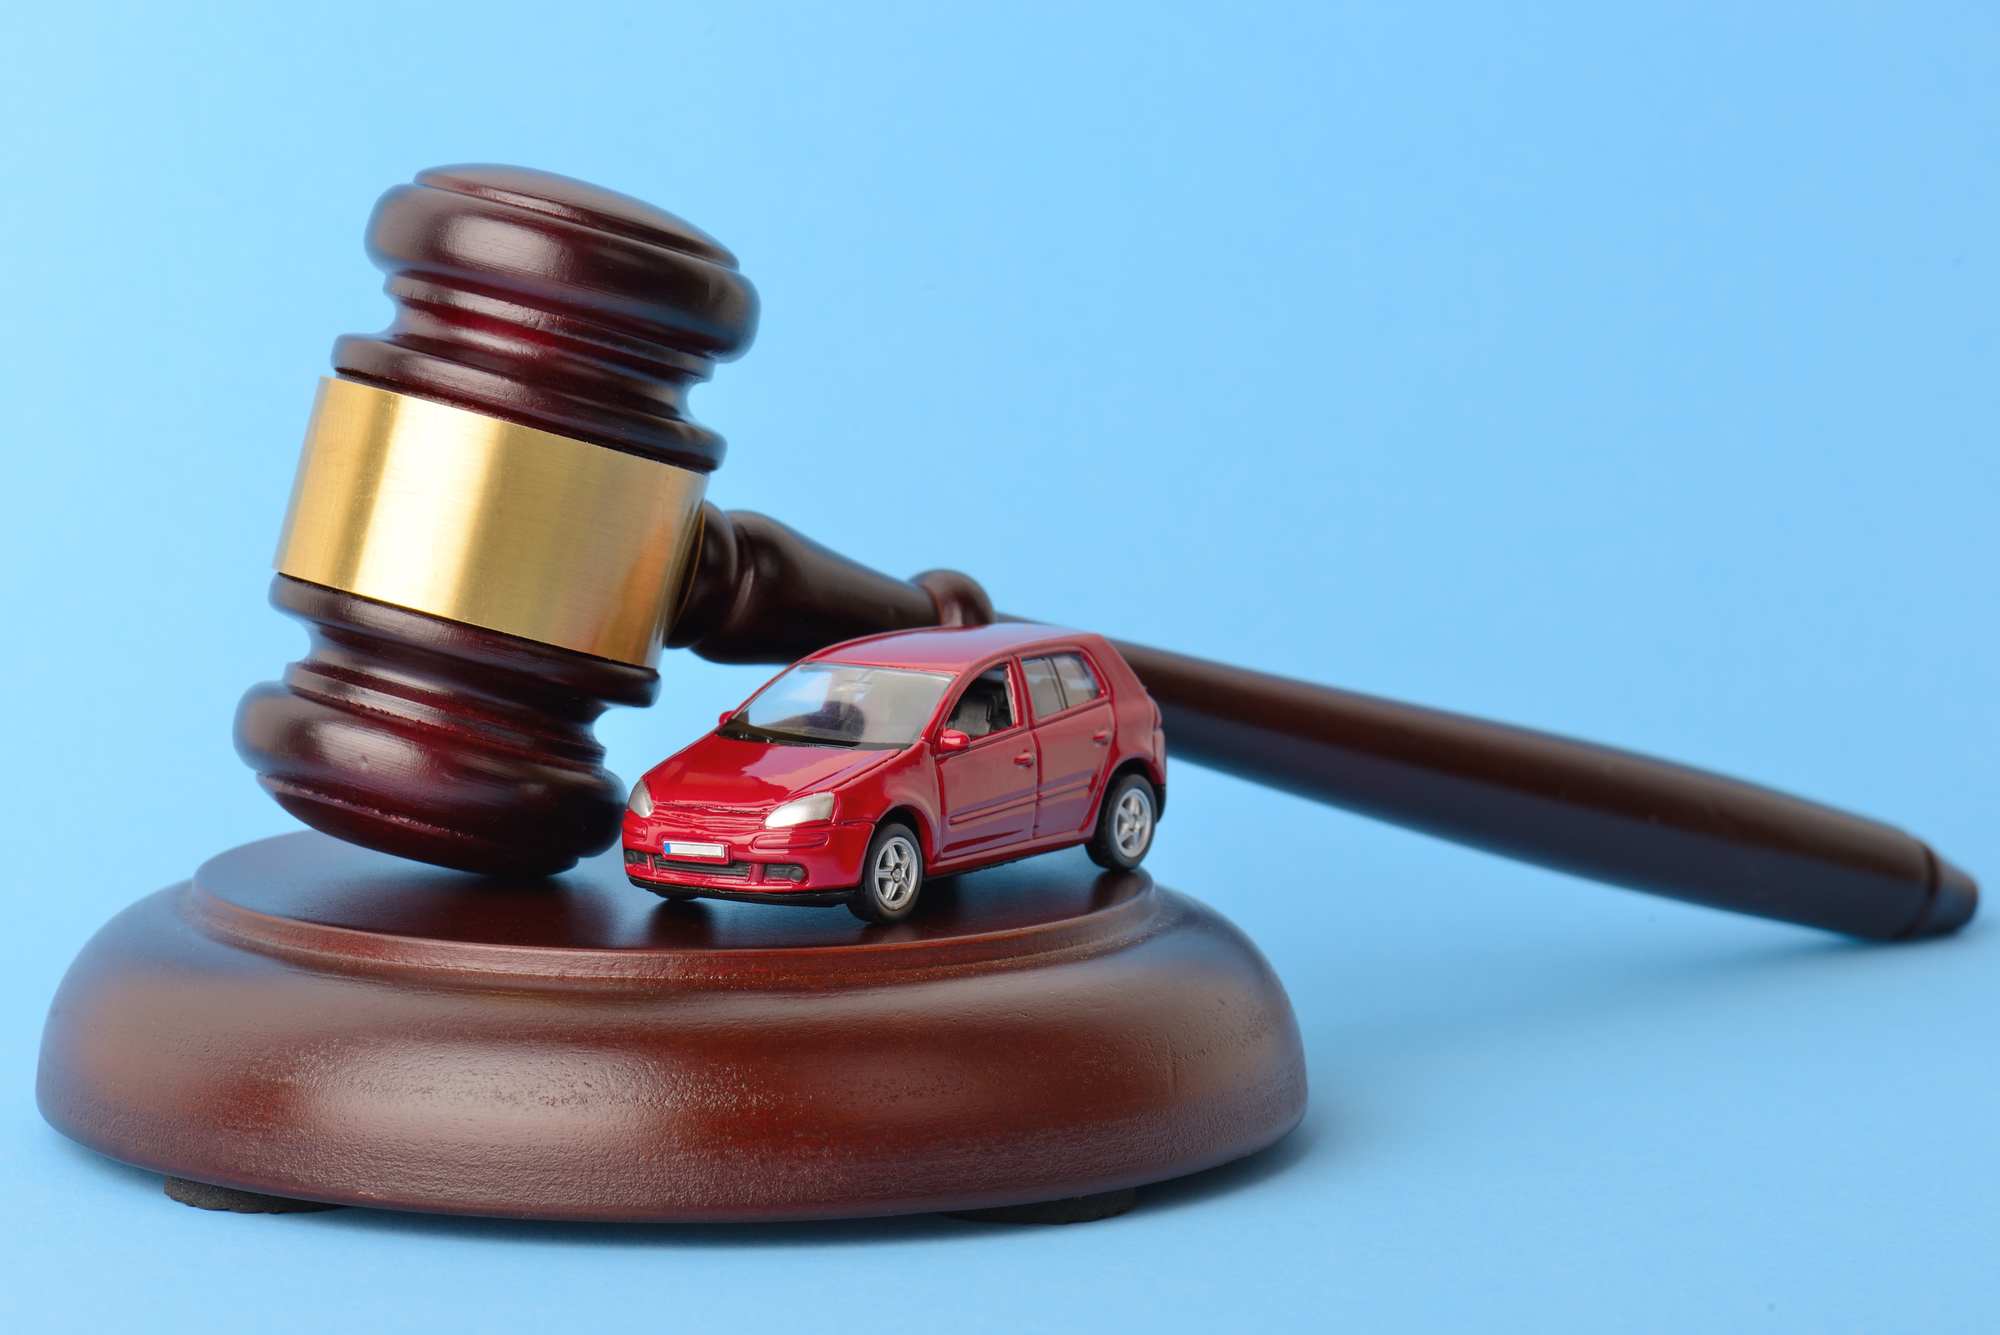  motor vehicle accident compensation claim lawyer Brisbane      